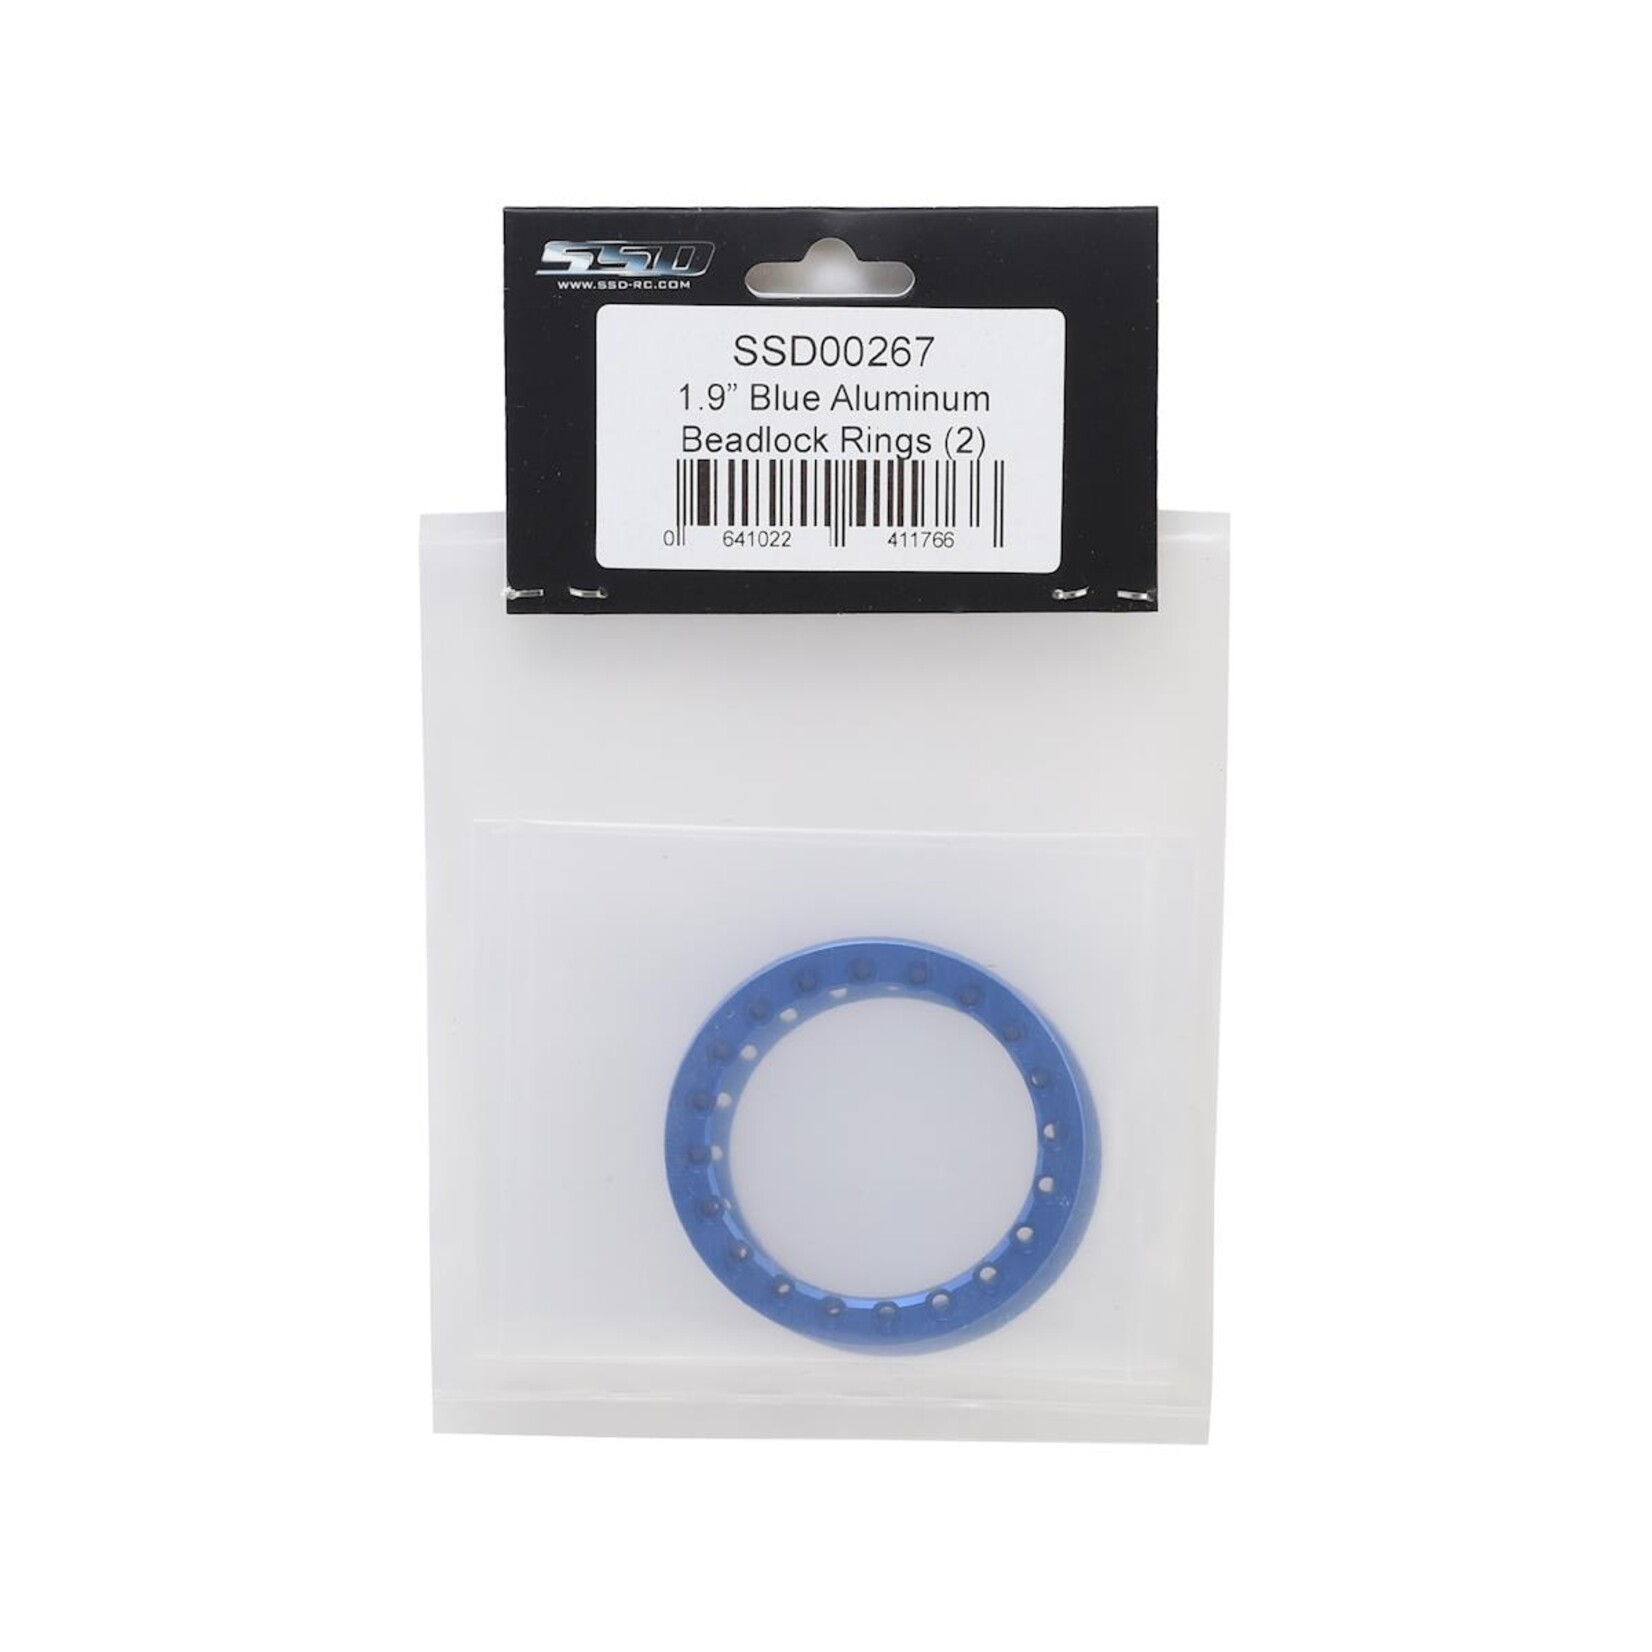 SSD RC SSD RC 1.9” Aluminum Beadlock Rings (Blue) (2) #SSD00267